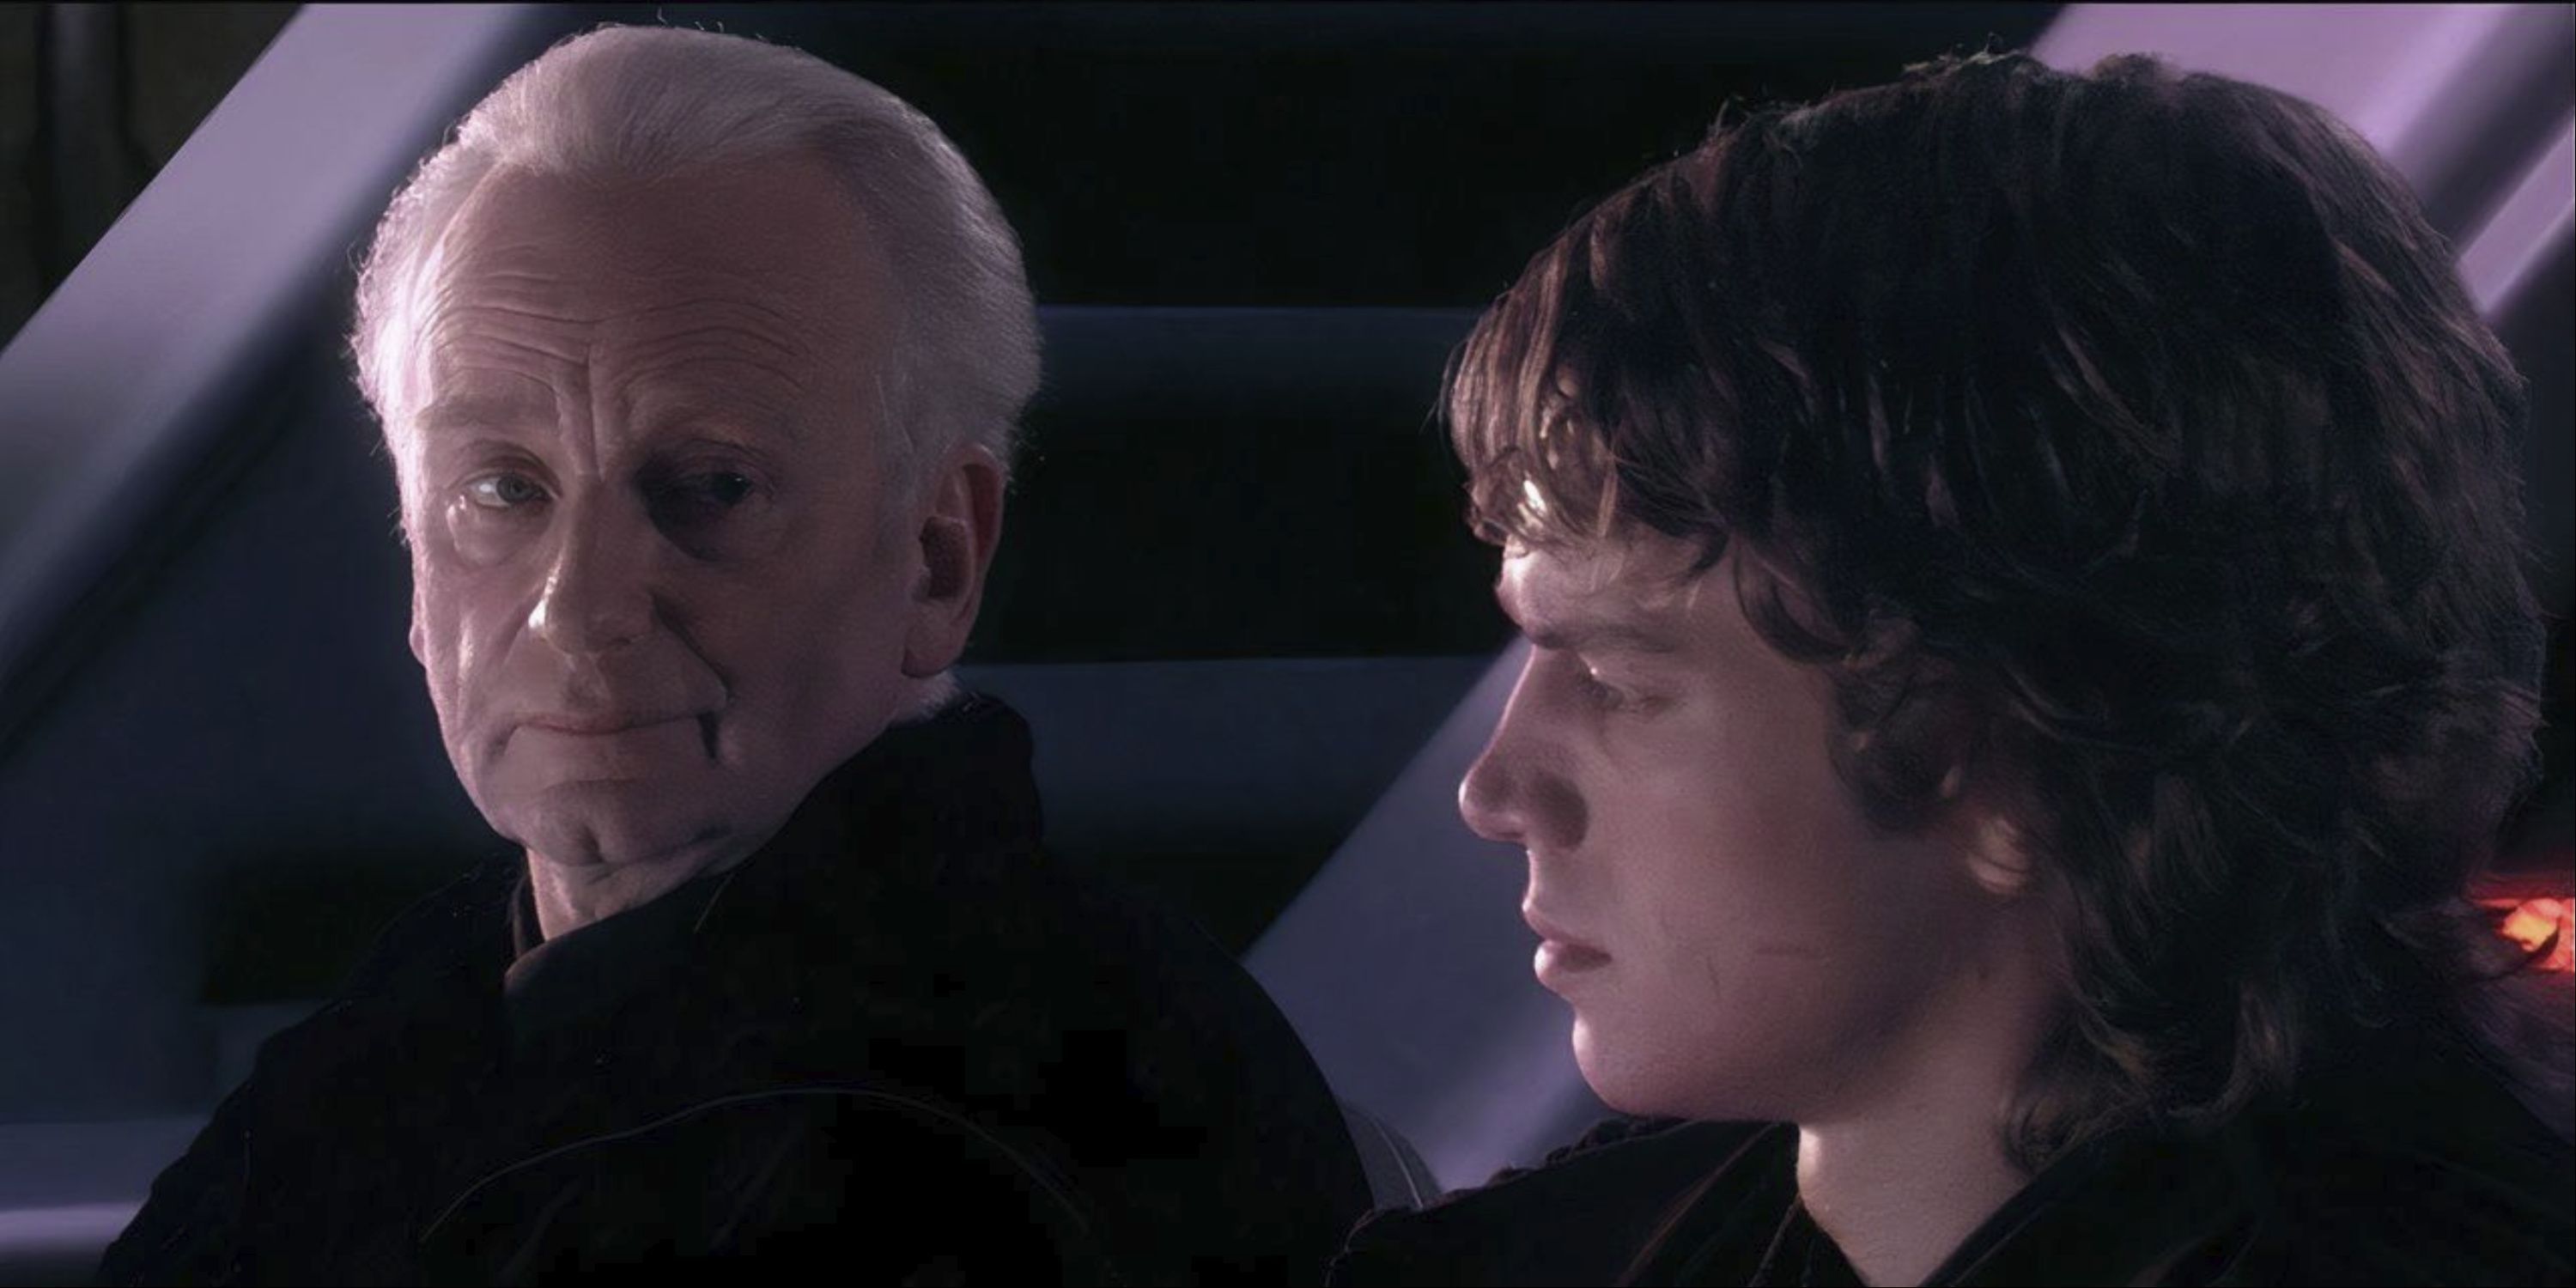 Palpatine reveals Sith secrets to Anakin Skywalker